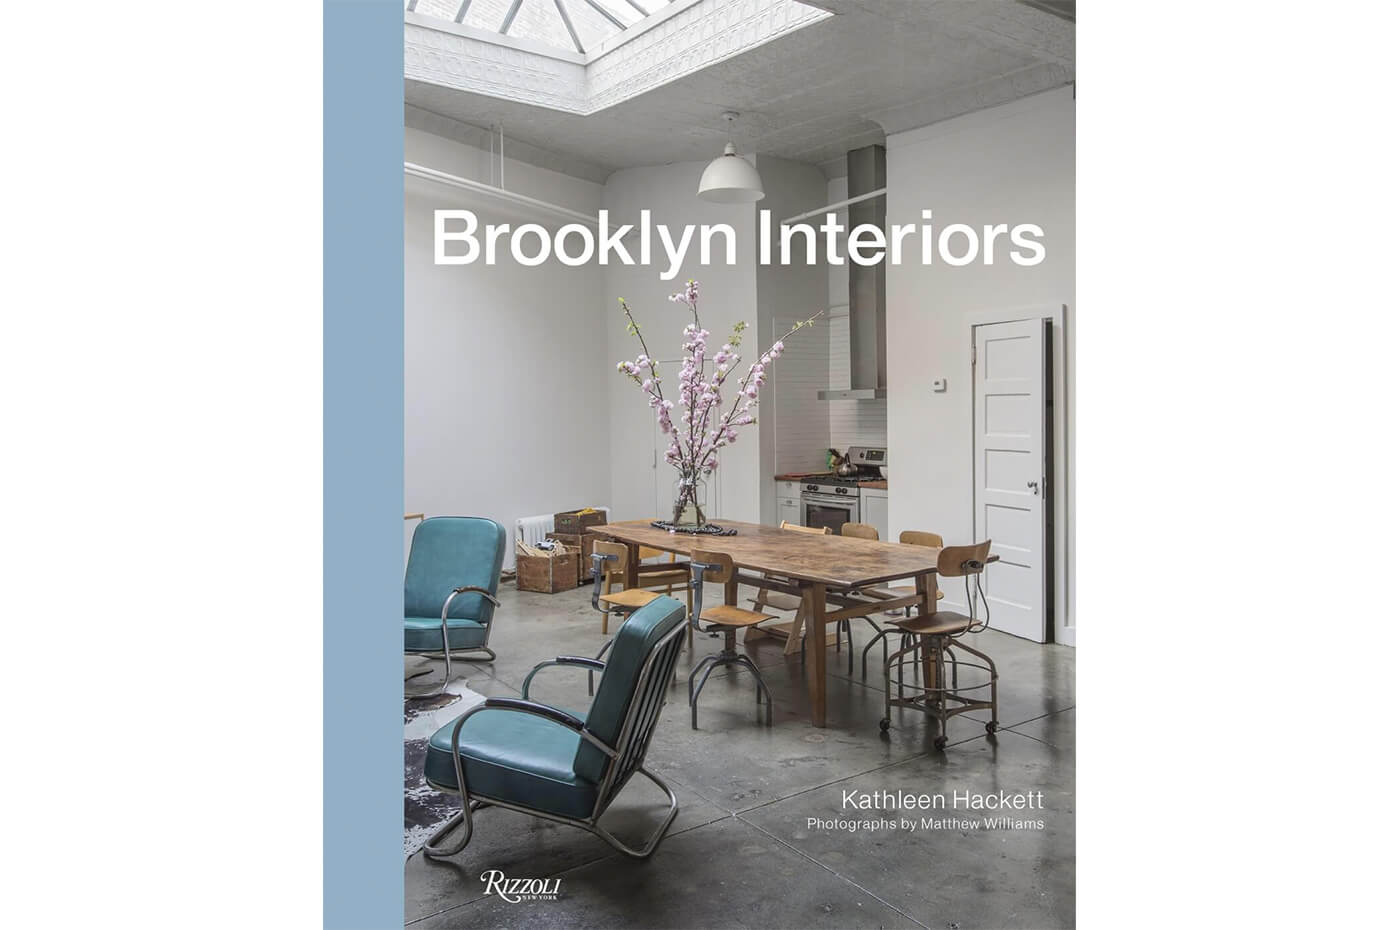 Brooklyn Interiors Book Review Rizzoli Kathleen Hackett